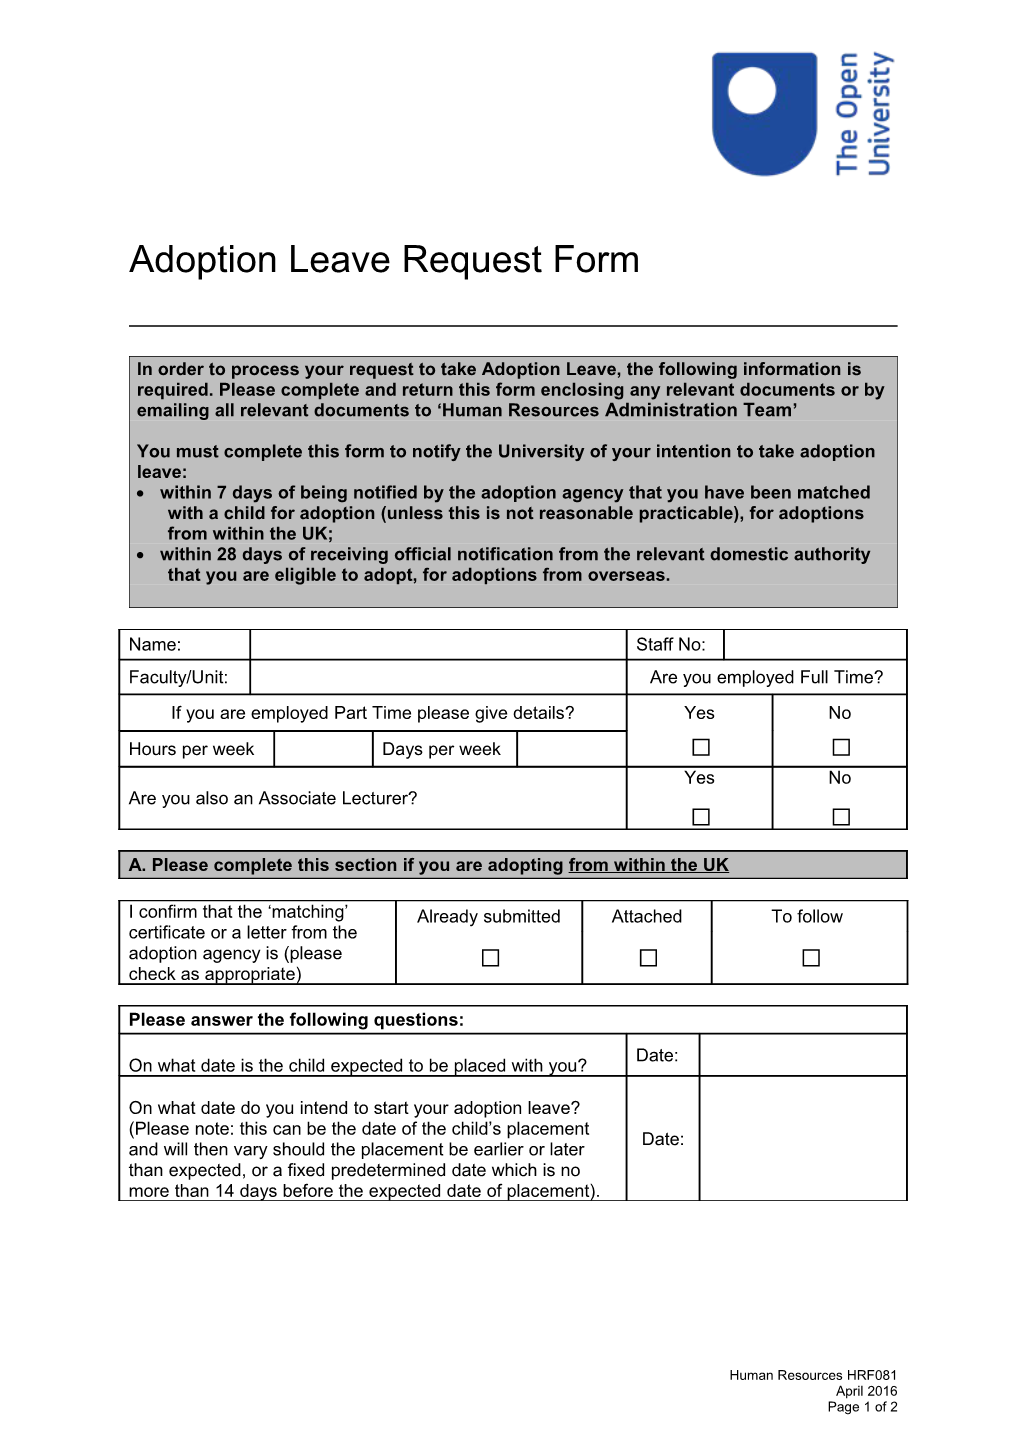 Adoption Leave Request Form HRF081